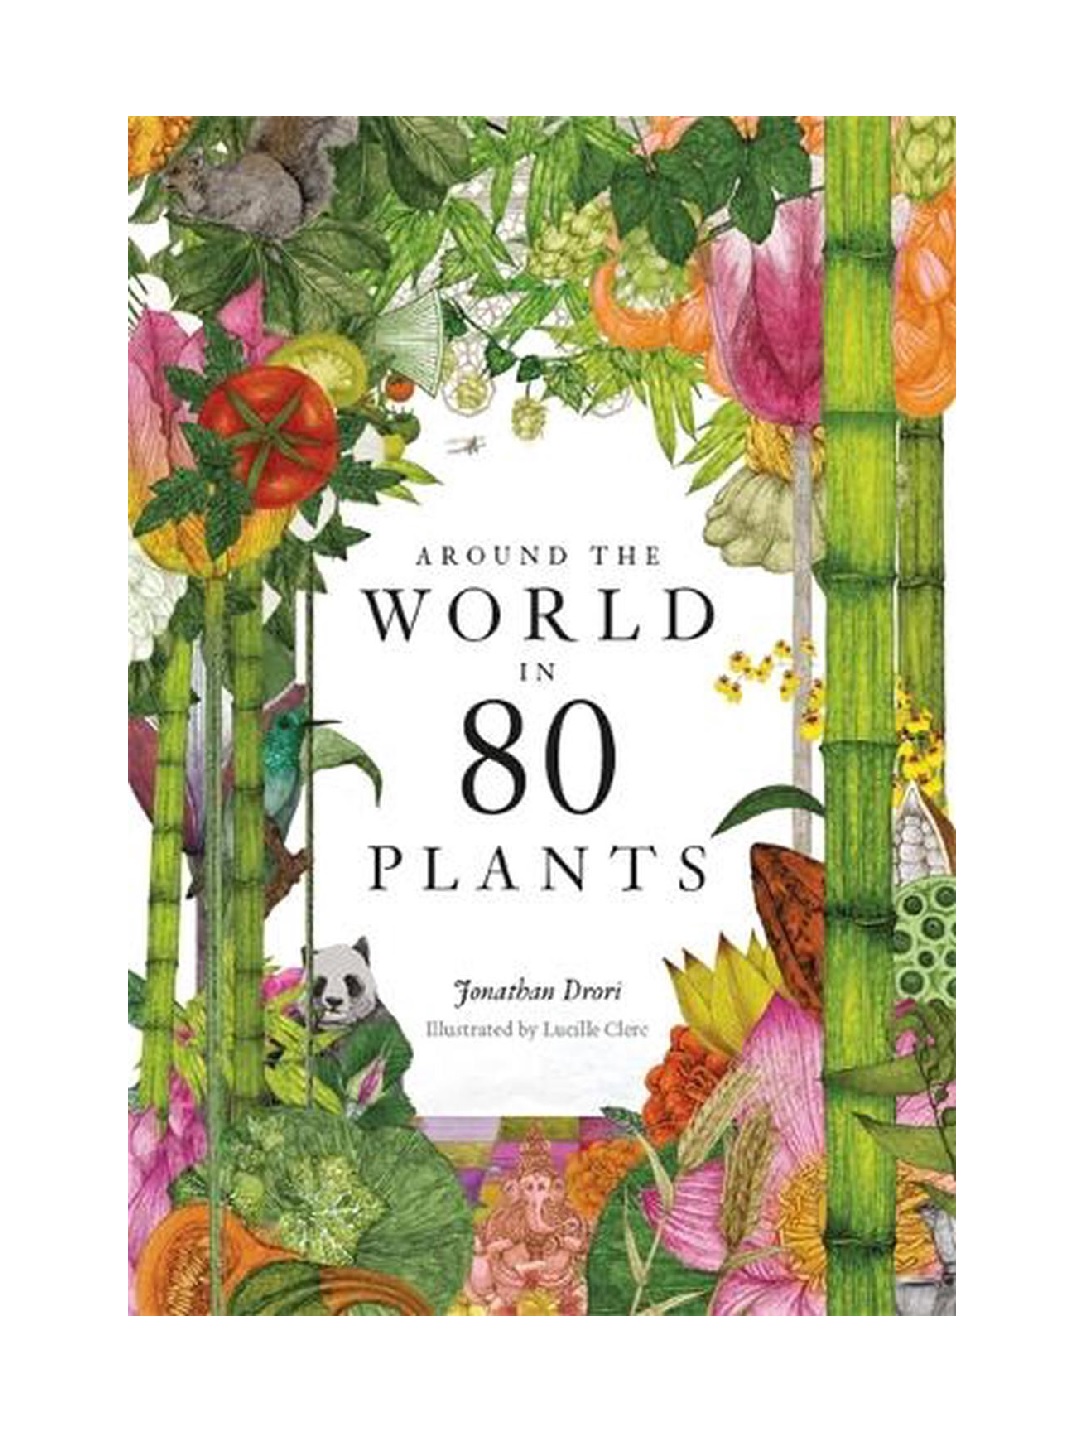 Around the world in 80 plants